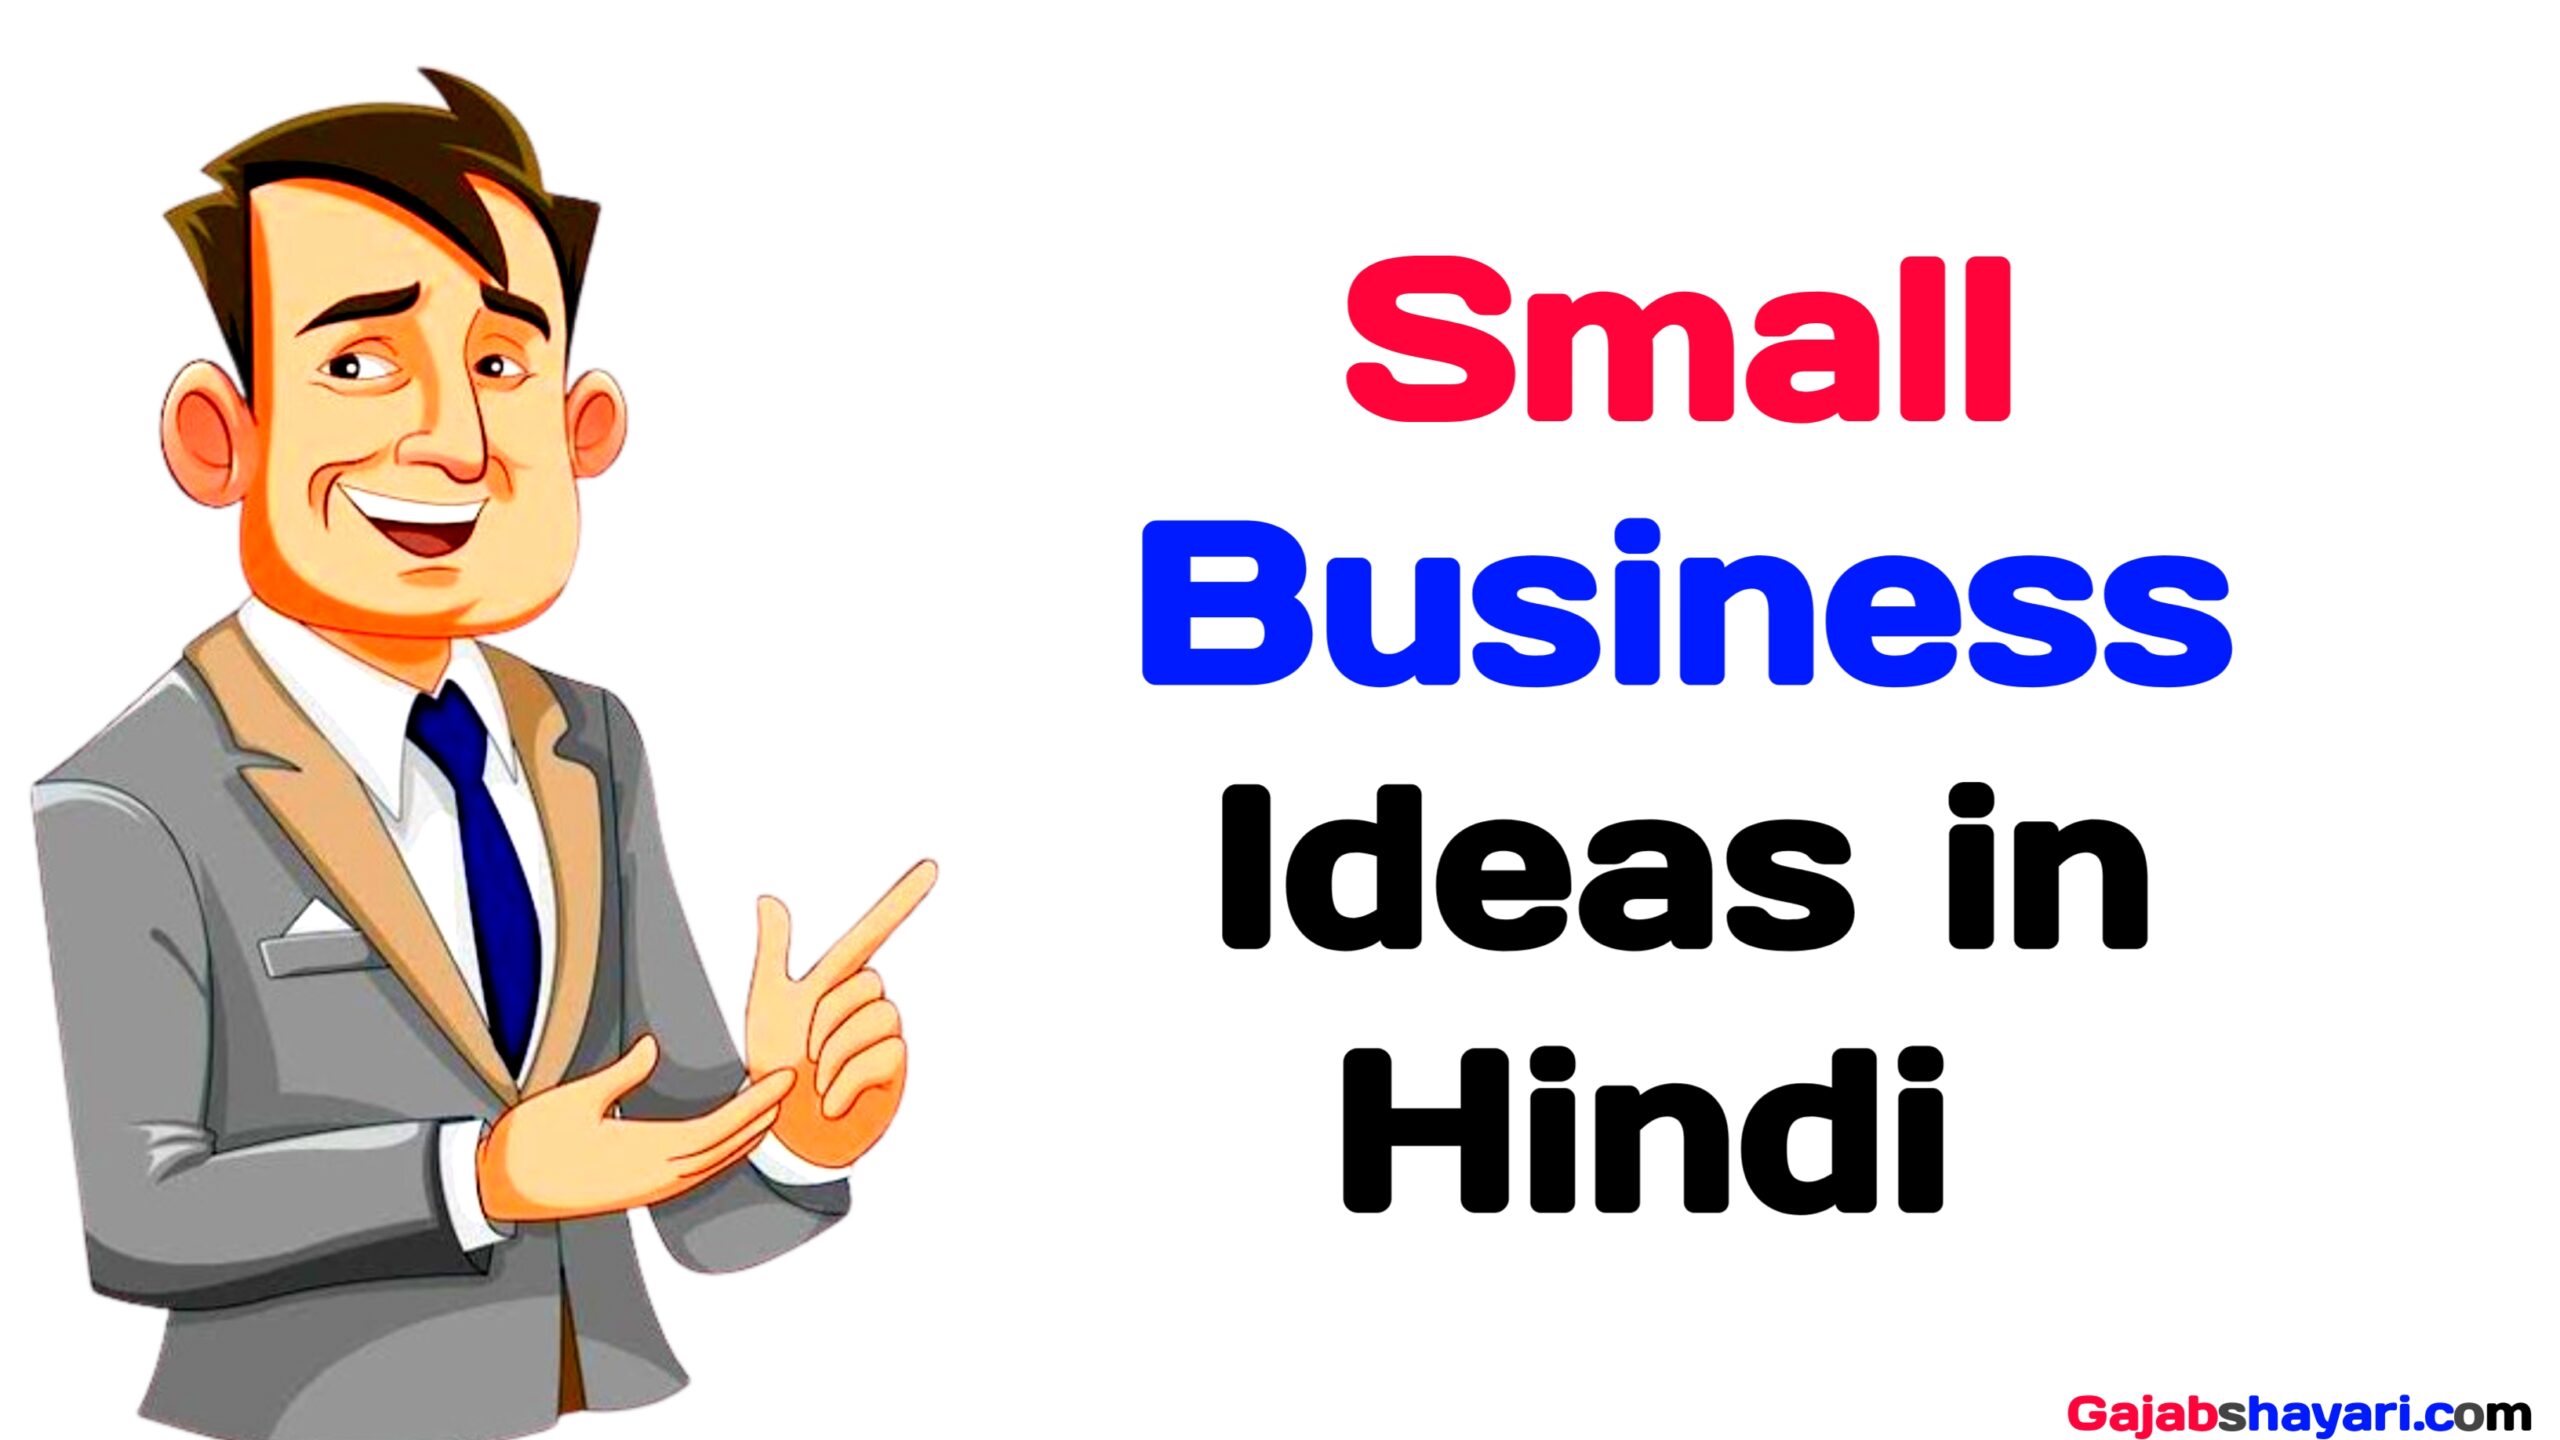 Small Business Ideas in Hindi | टॉप 10 बेस्ट बिजनेस आईडियाज, स्मॉल बिजनेस आइडिया, स्मॉल बिजनेस आईडियाज हिंदी में, छोटे बिजनेस आइडिया, small business ideas, small business, small business ideas in India, small business ideas from home, small business ideas at home, small business ideas for women, Yahoo small business, how to start a small business, small business ideas in Telugu, small business ideas in Mumbai, small business ideas in Delhi